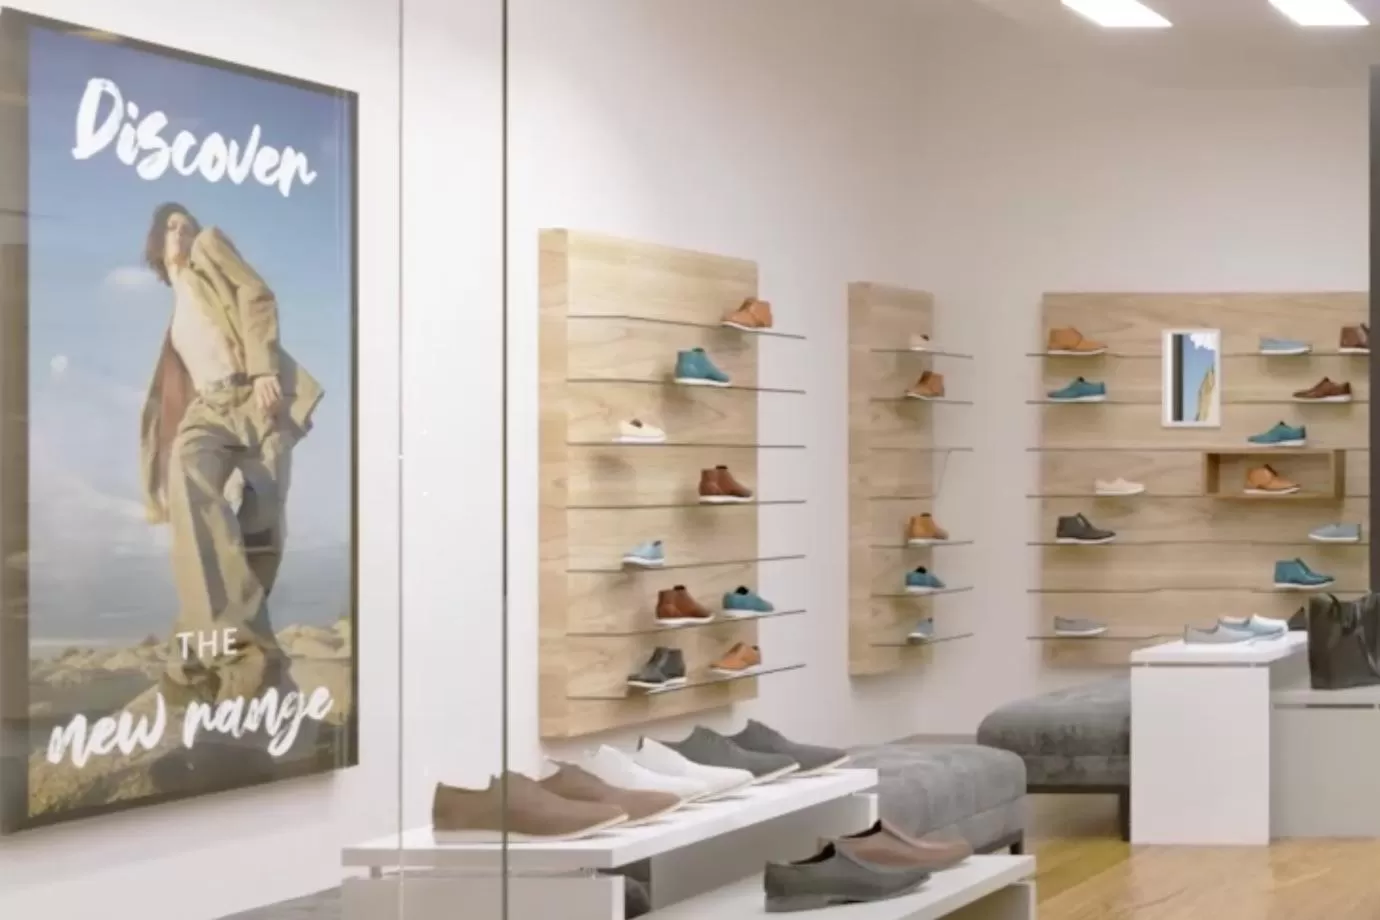 Digital signage in a shoe shop